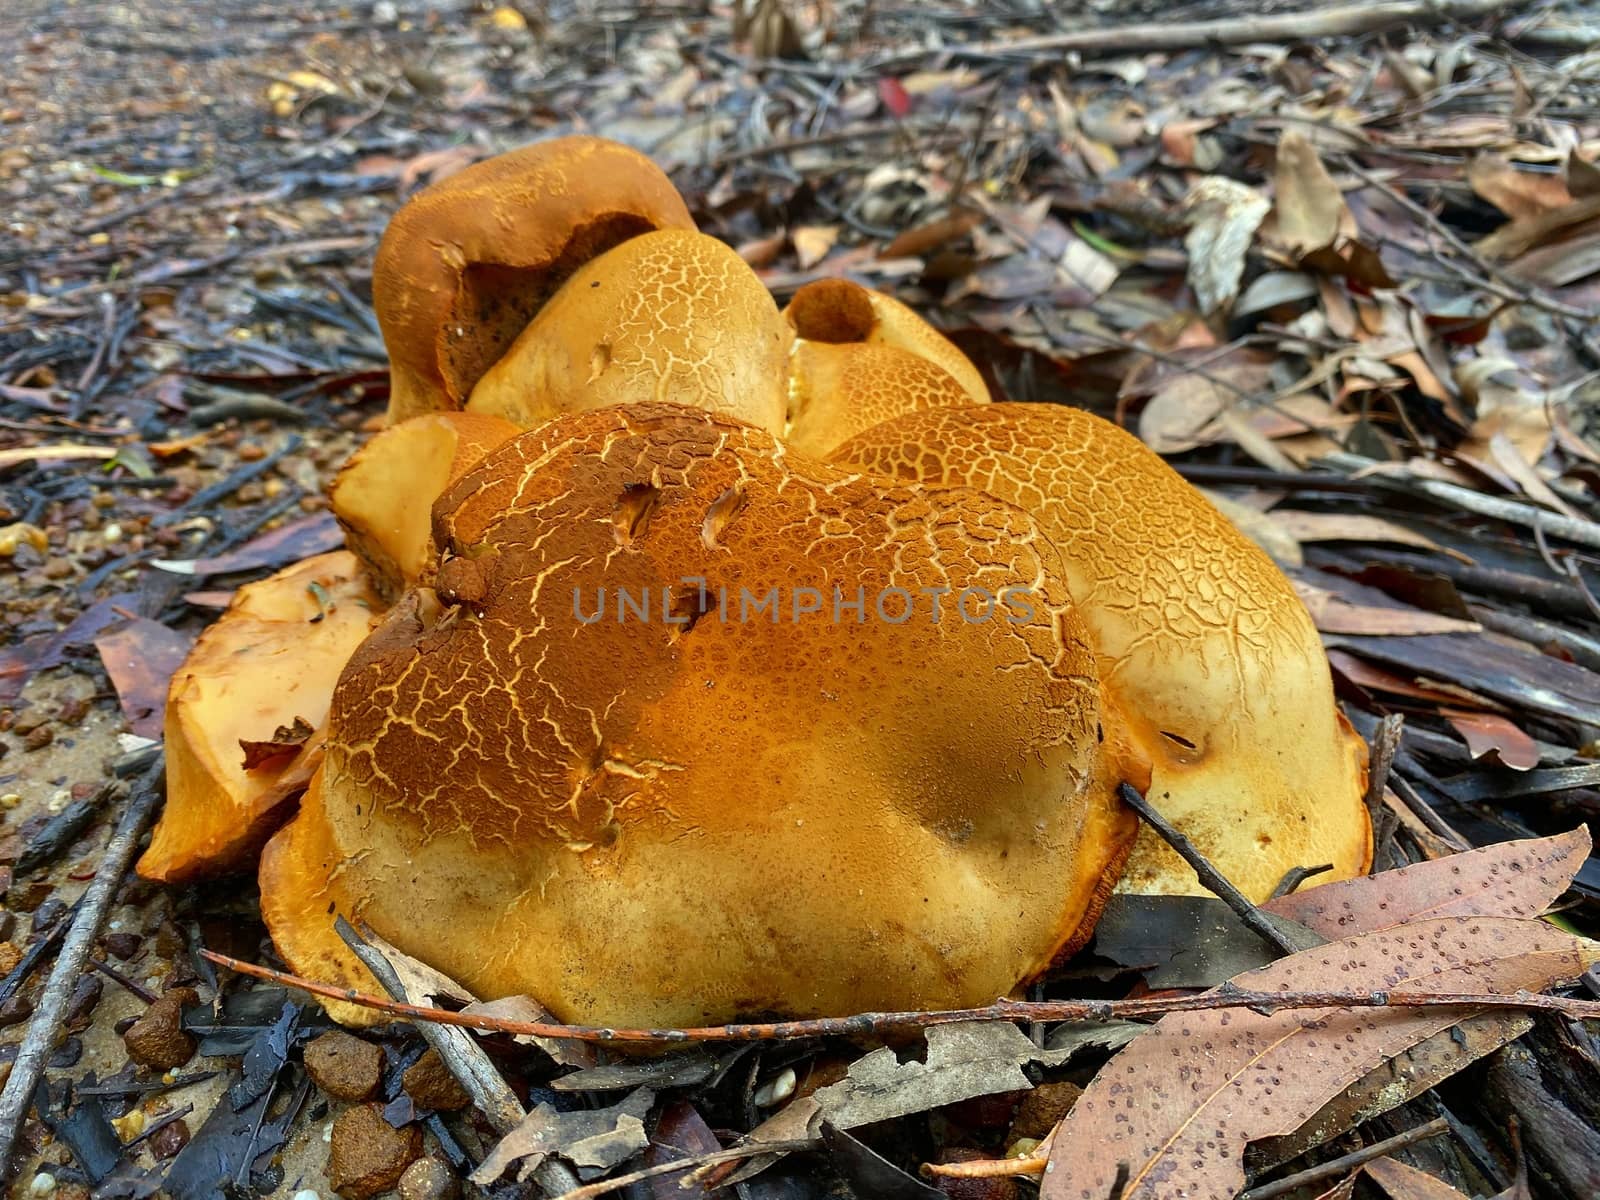 A large, unidentified cluster of orange mushrooms by Binikins